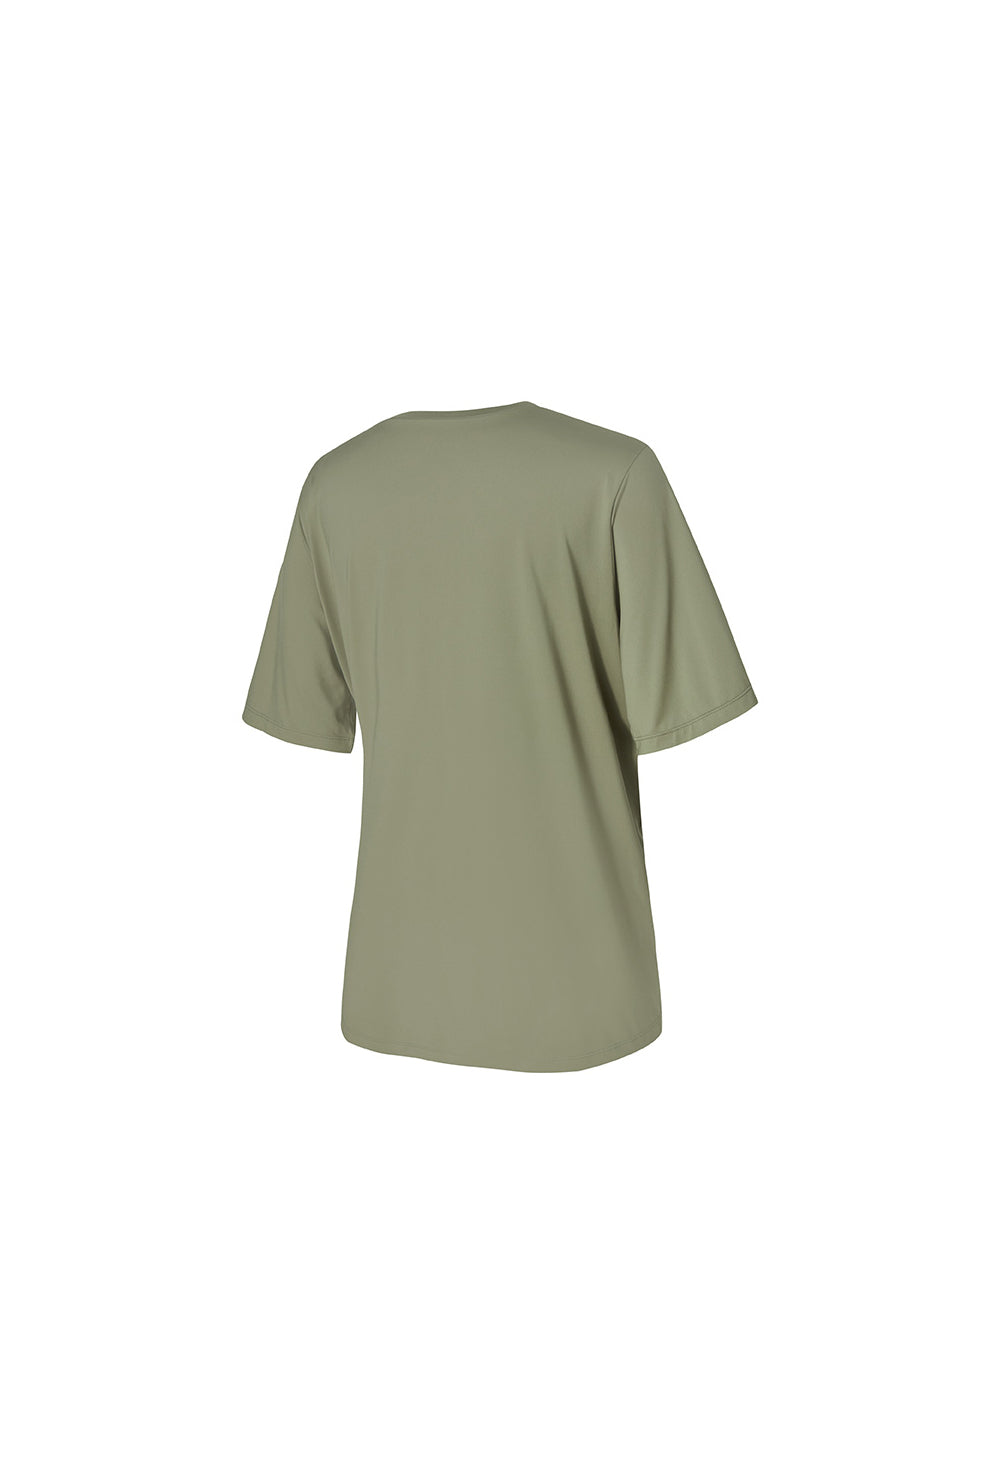 XXMX Coverup T-Shirt - Ash Olive